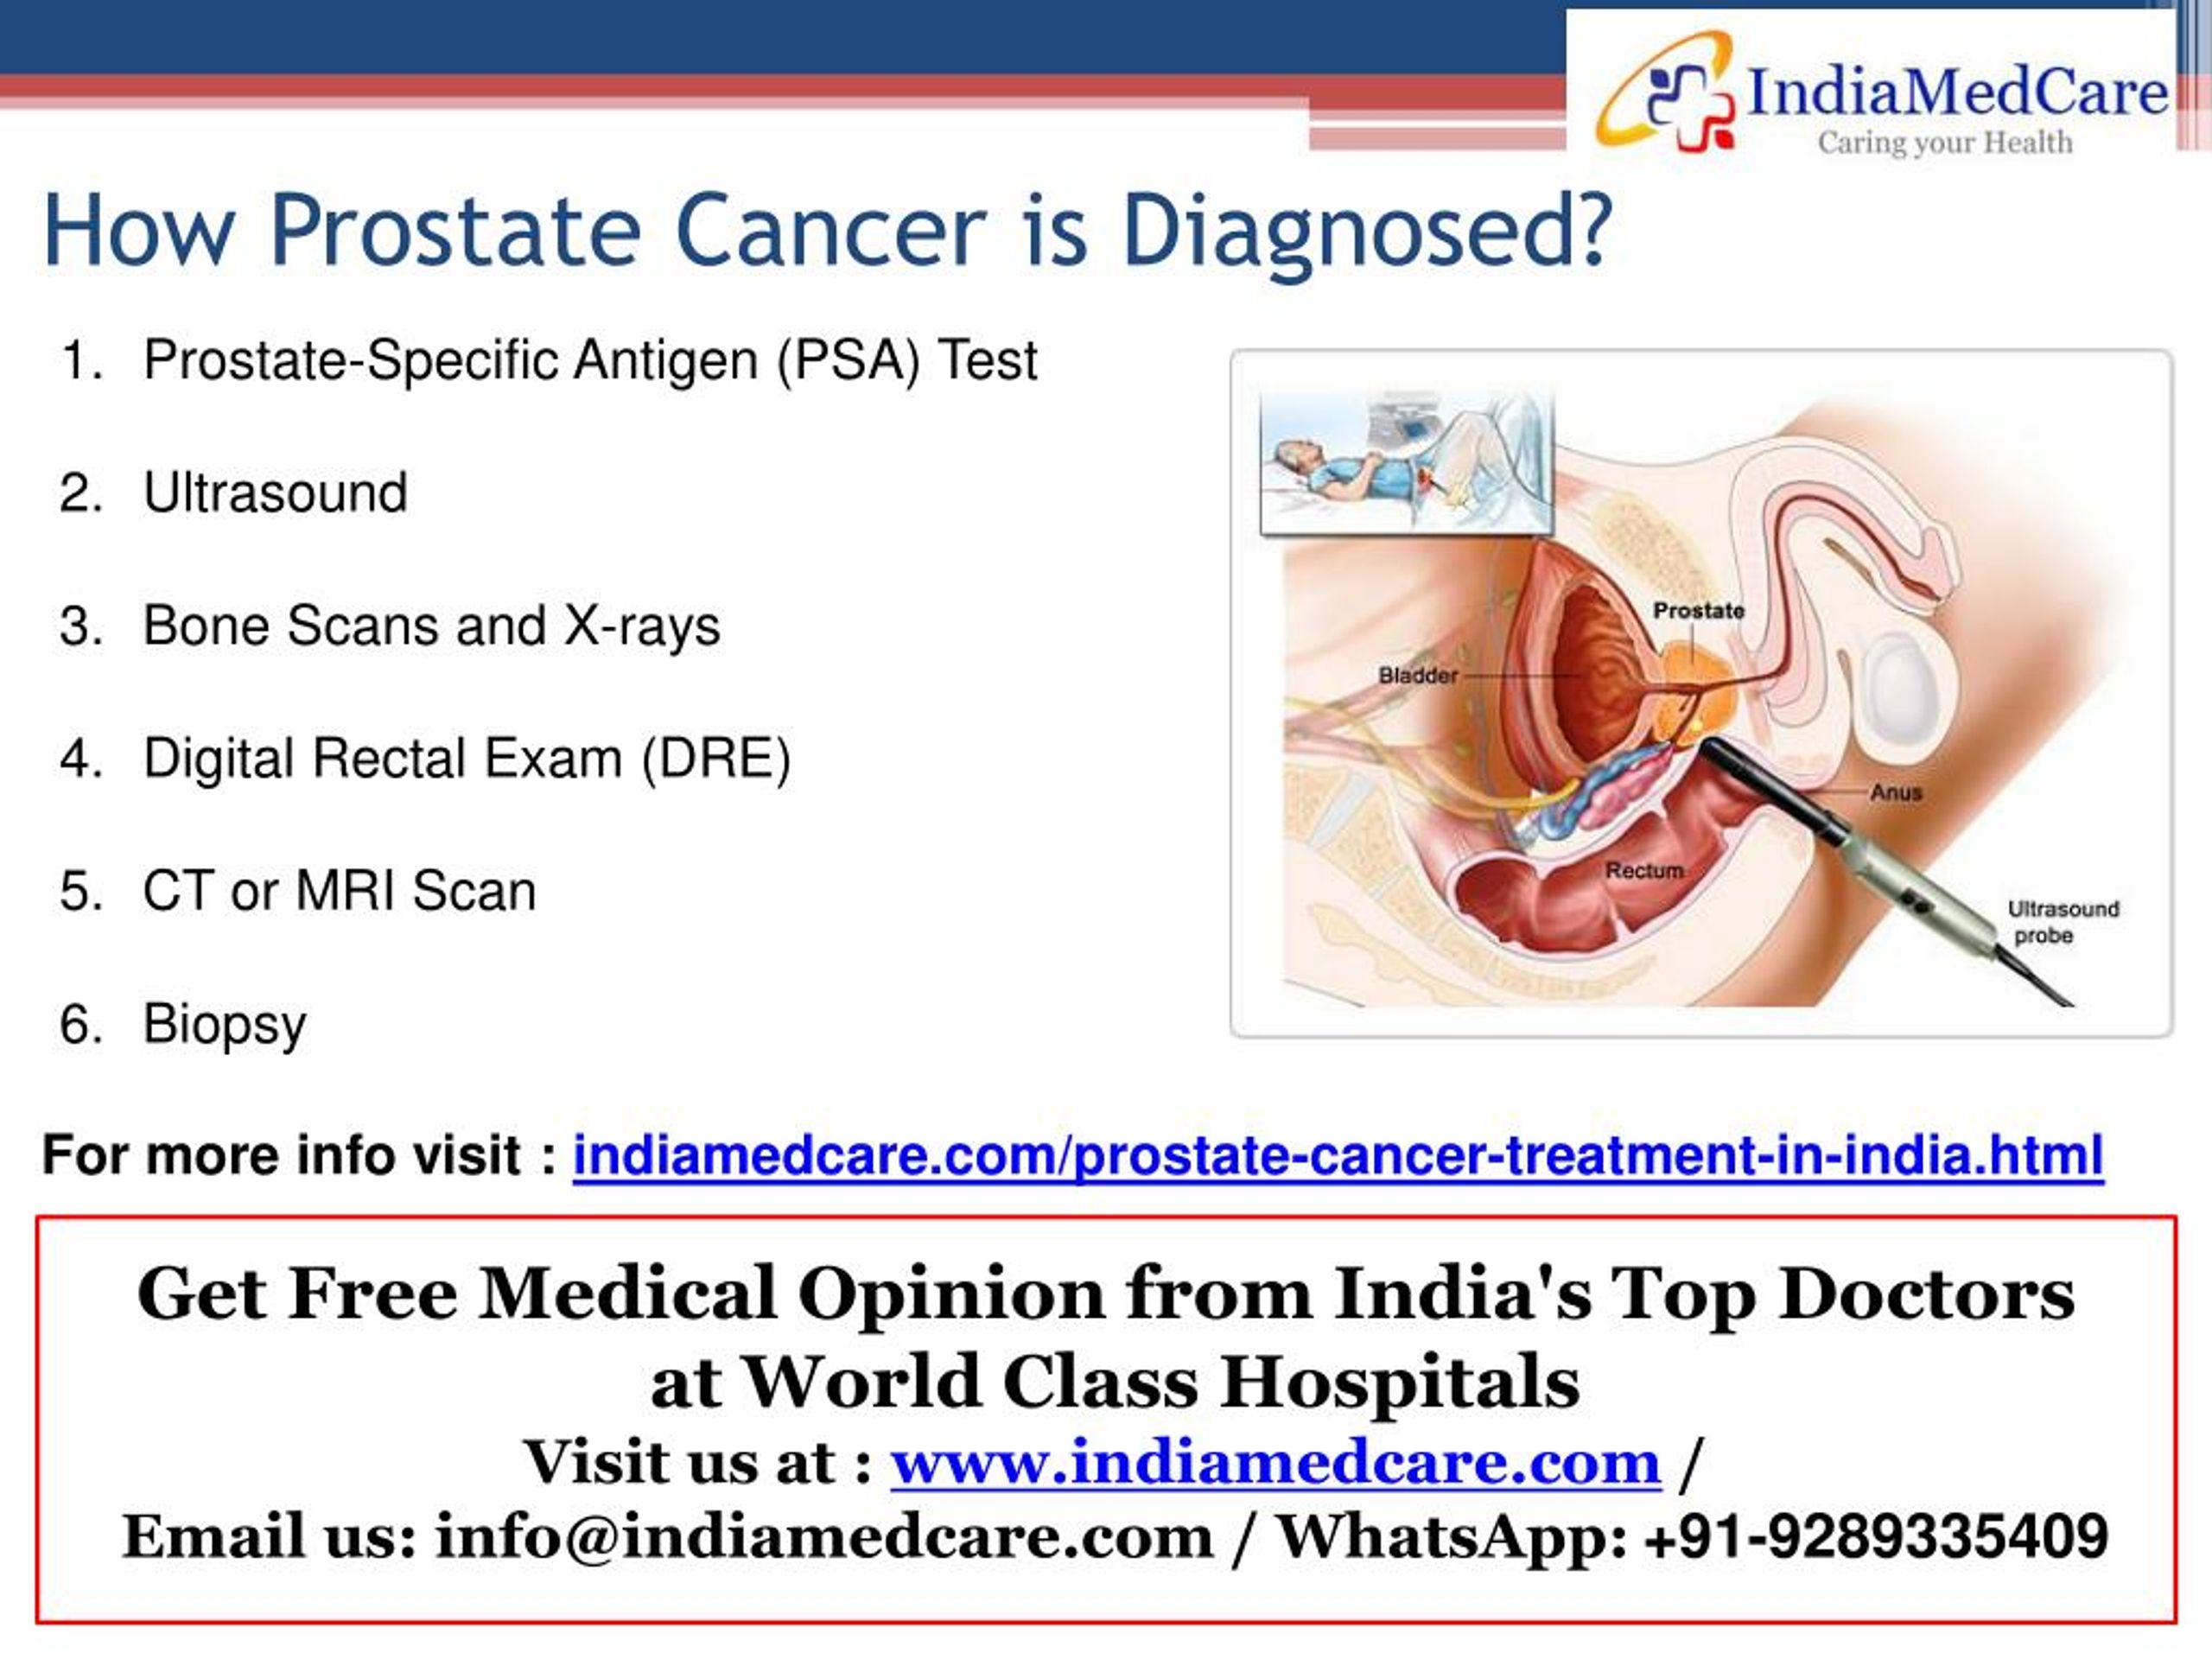 What is free prostate specific antigen